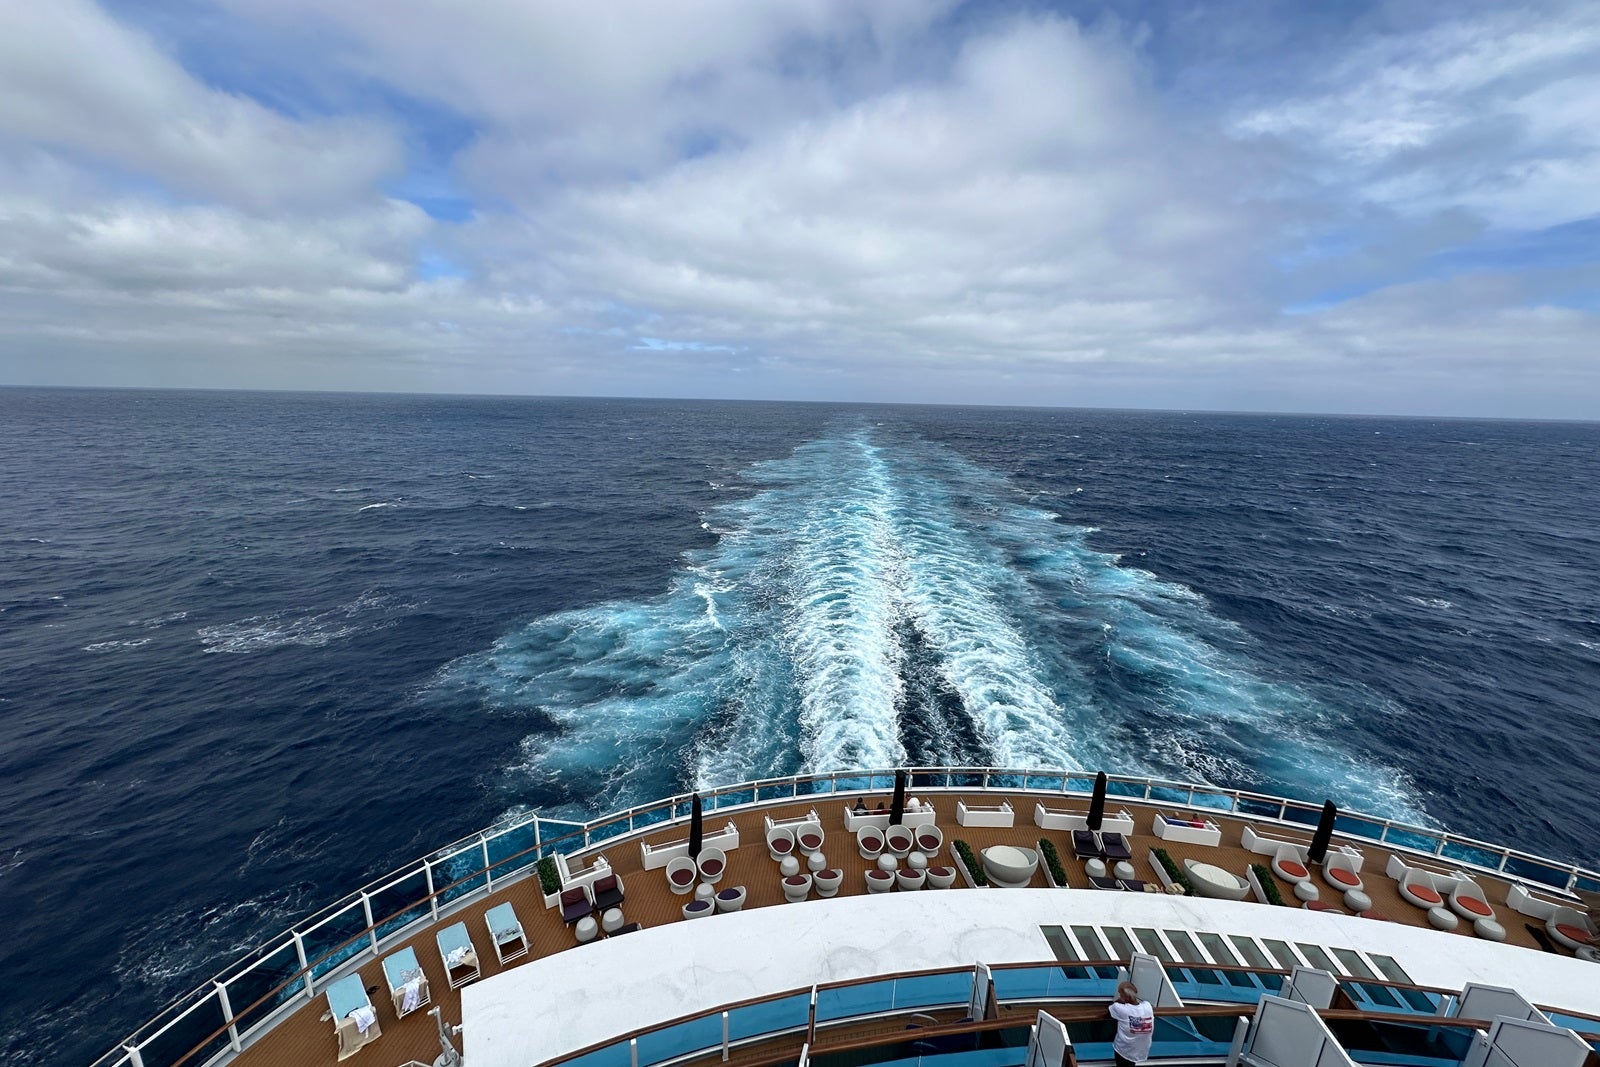 why do cruise ships travel so slowly